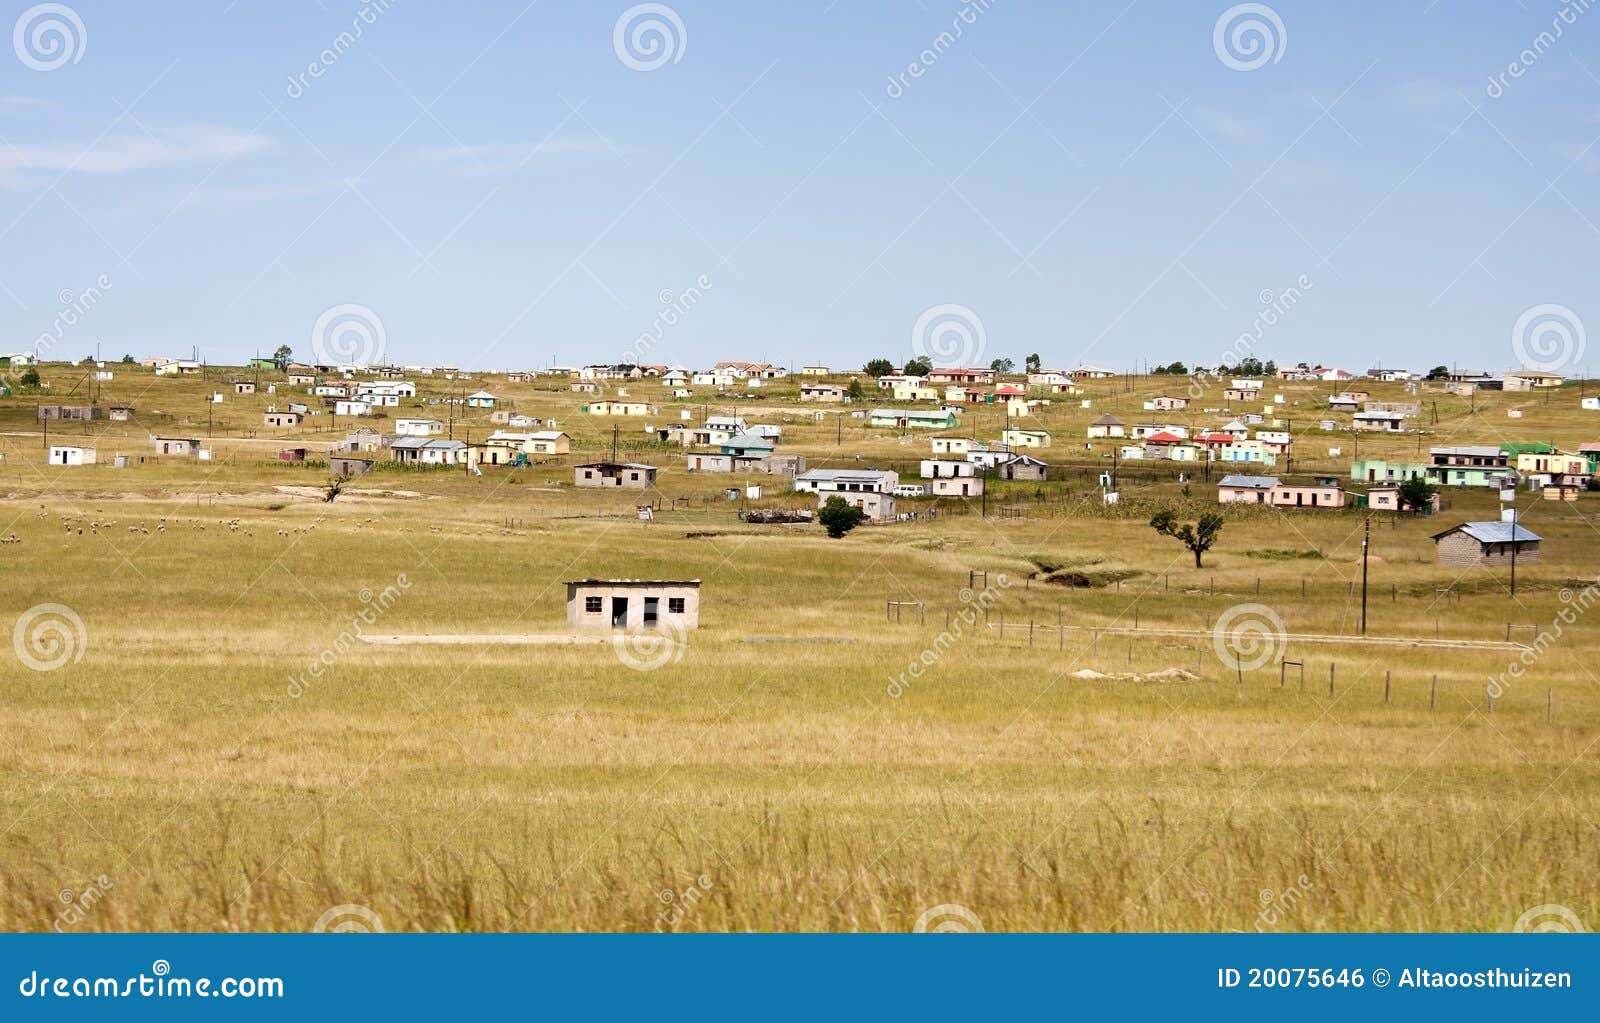 shacks in transkei south africa corrugated iron